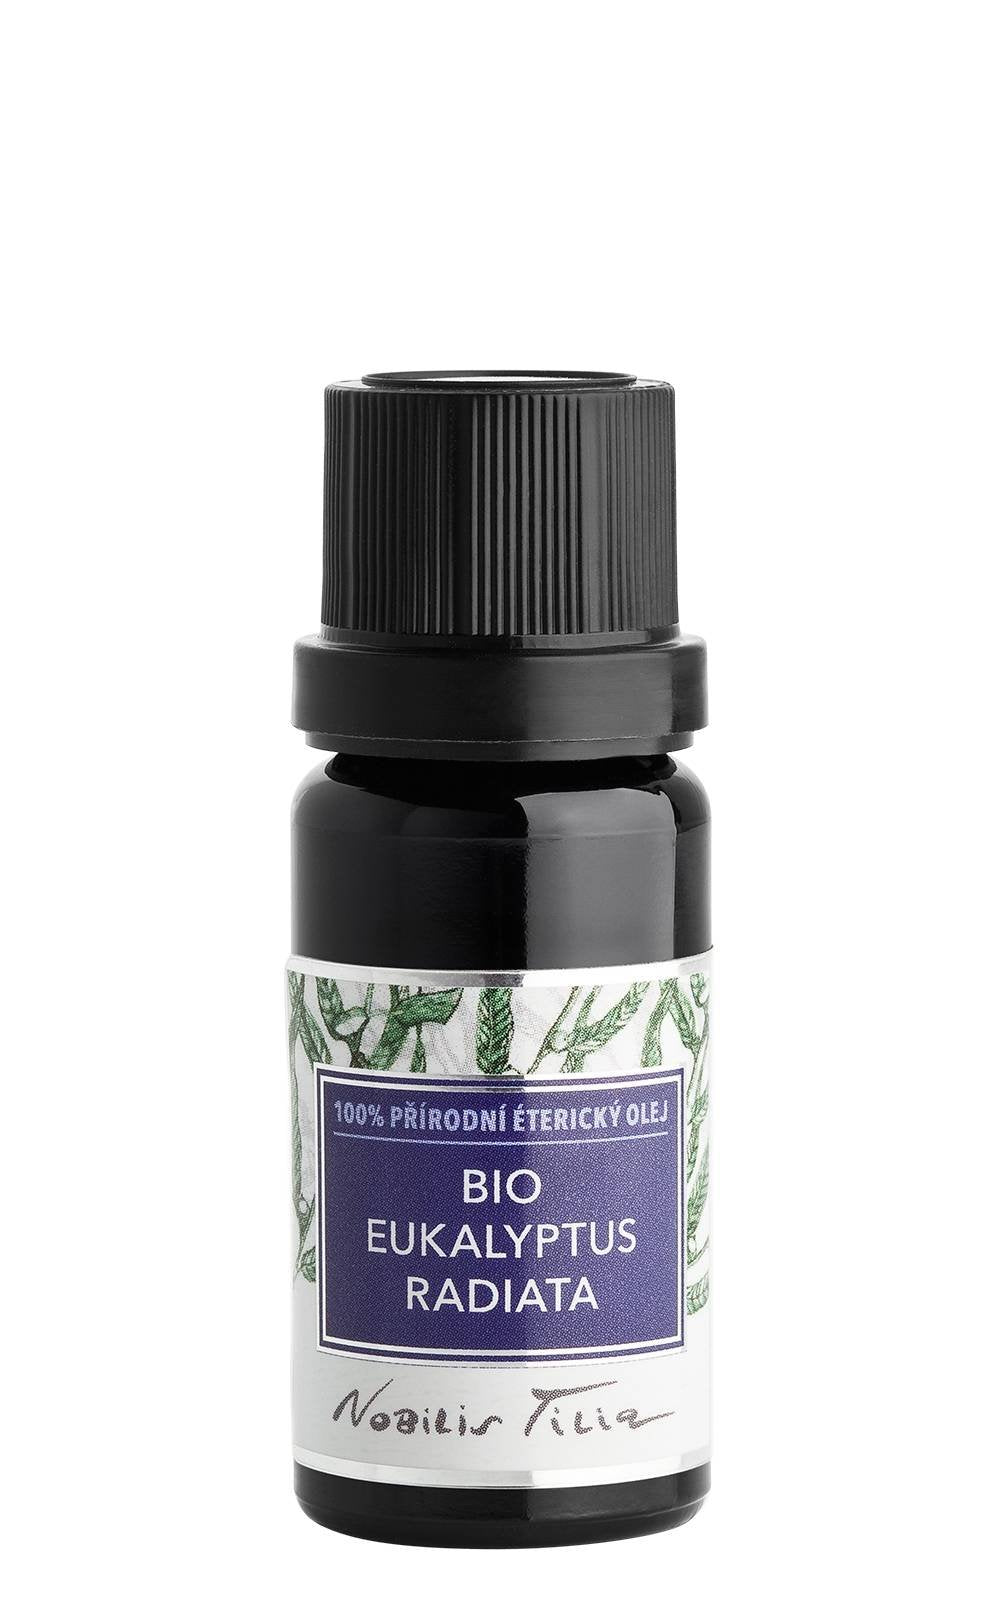 Nobilis Tilia Éterický olej - BIO eukalyptus radiata (10 ml) Nobilis Tilia